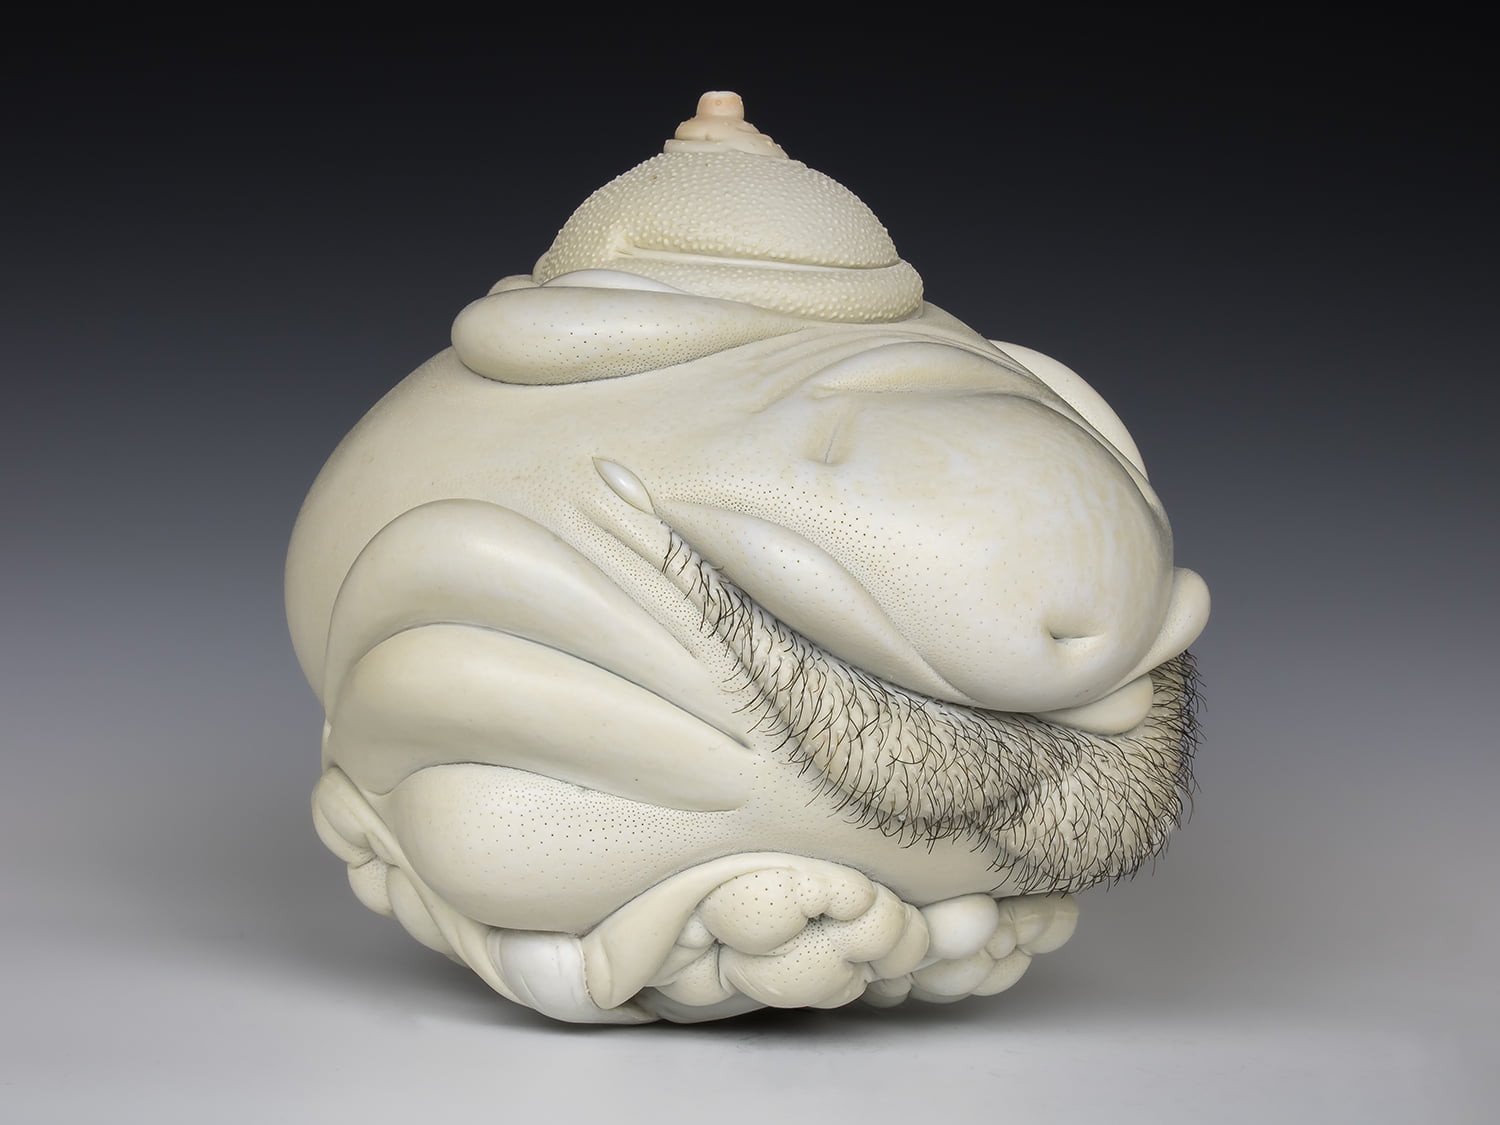 Jason Briggs "Royal" (alternate view 3). porcelain and mixed media sculpture ceramics.